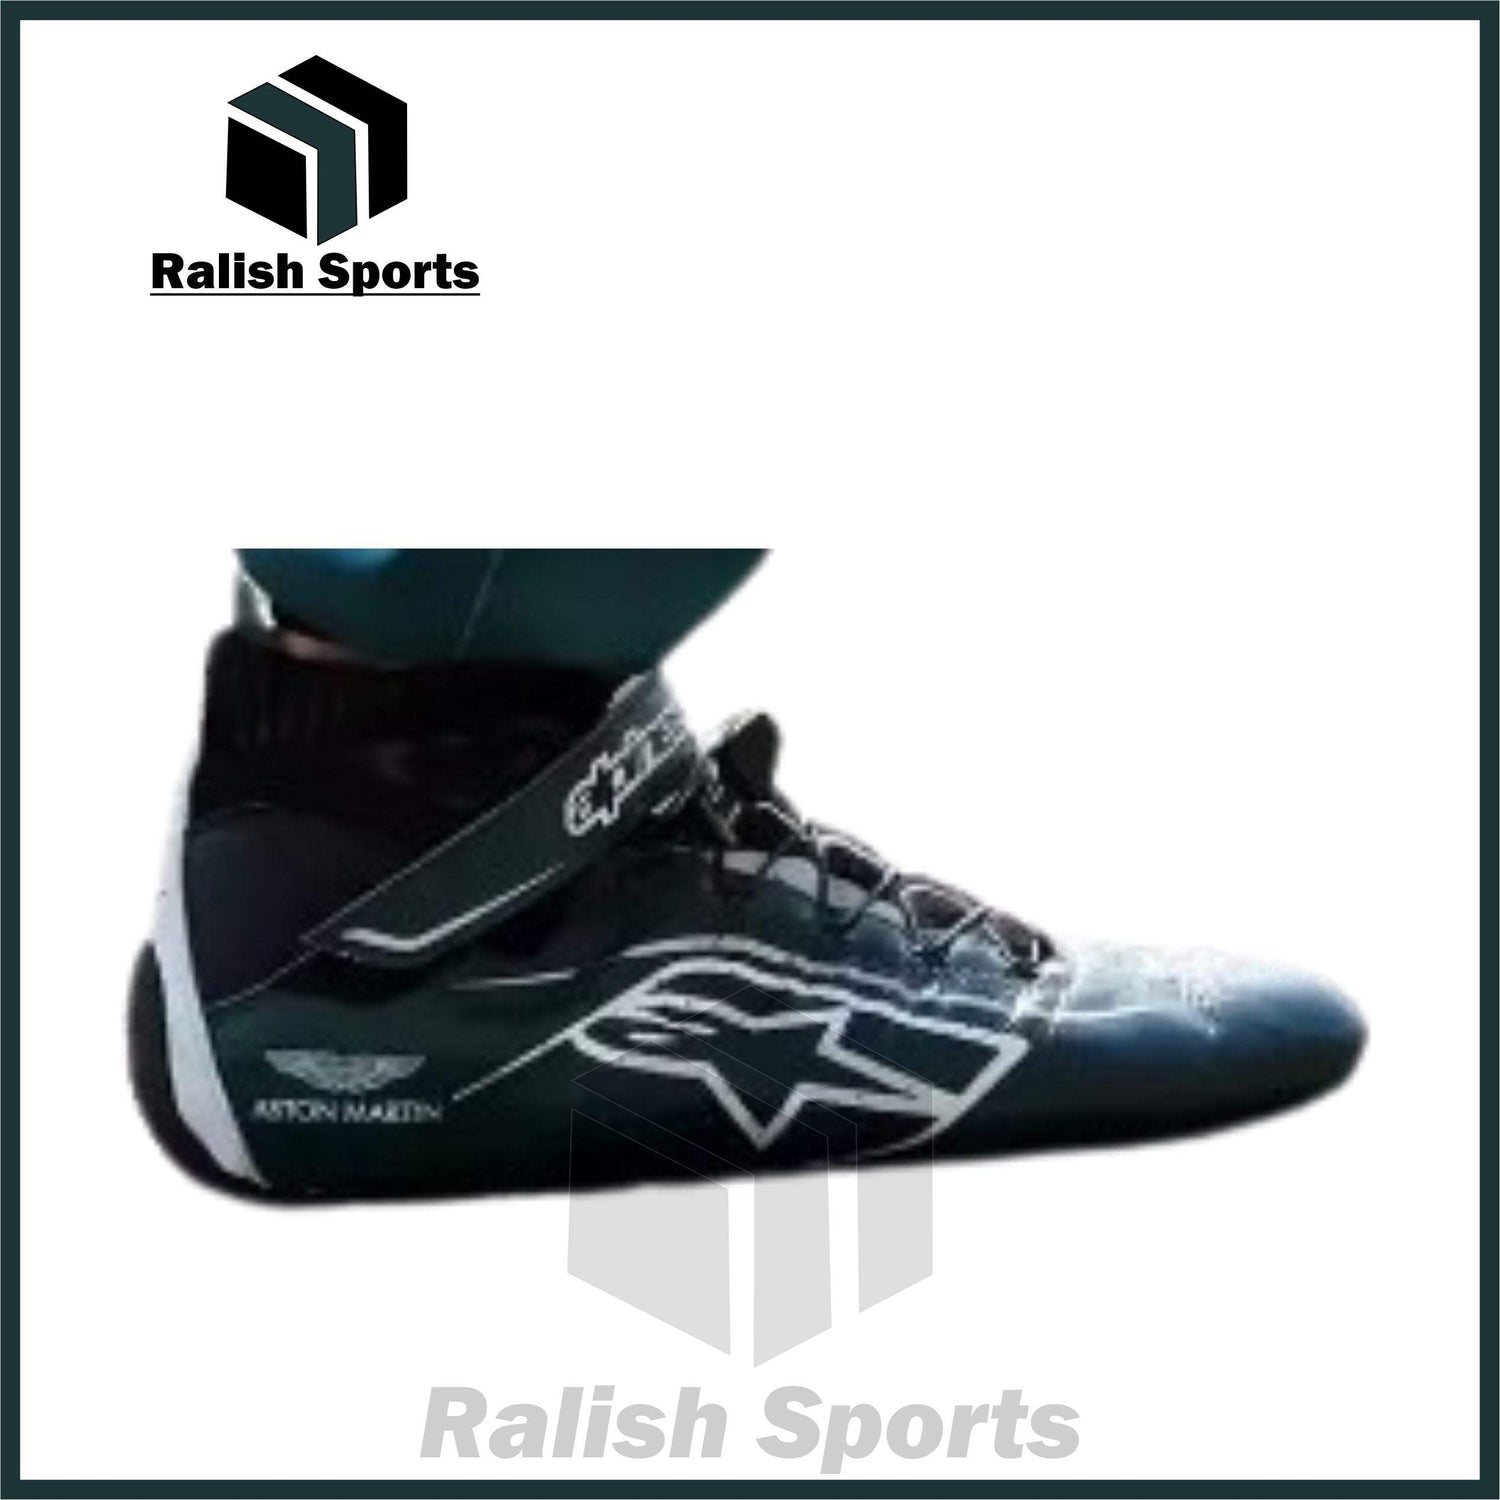 LANCE STROLL Race Shoes 2021 - Ralish Sports